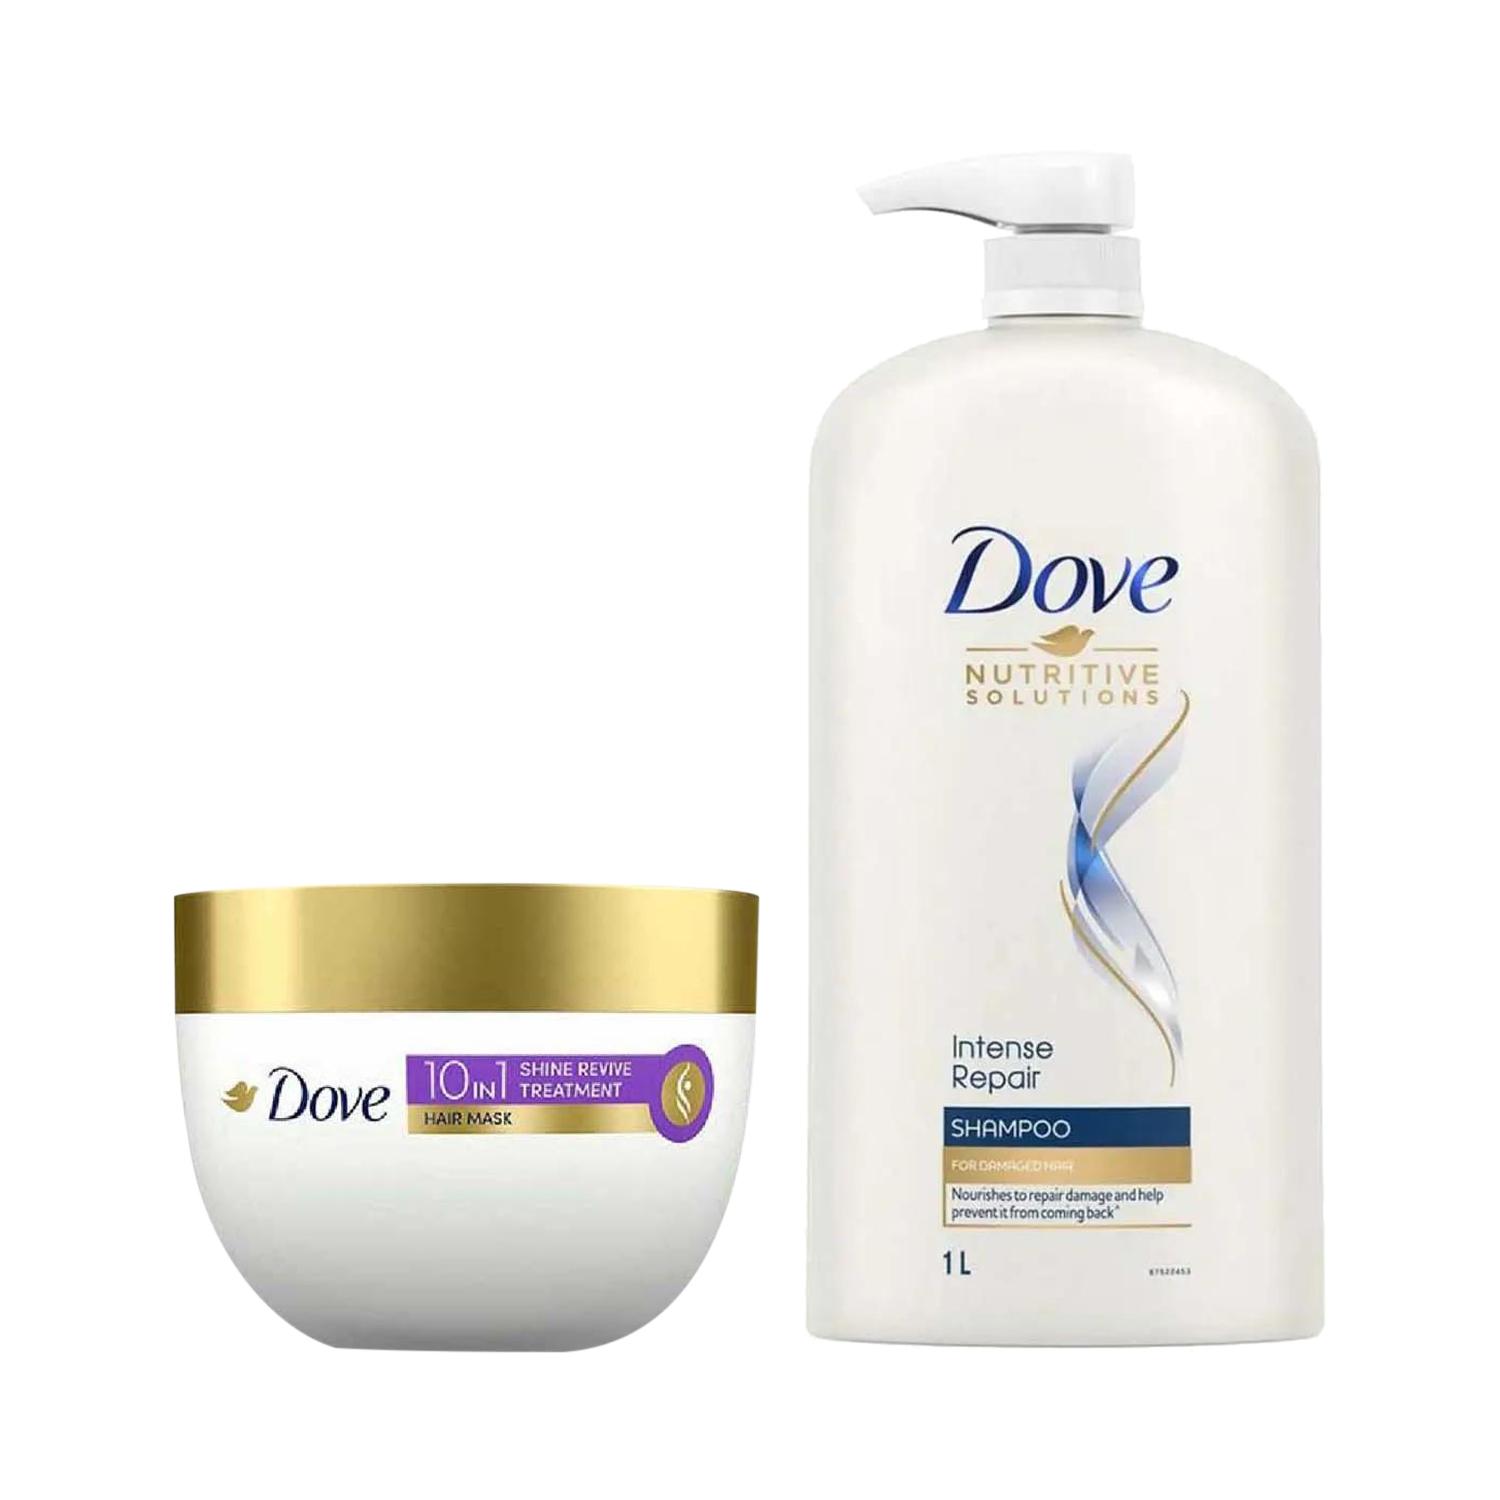 Dove | Dove Intense Repair Shampoo (1000 ml) + 10 in 1 Shine Revive Treatment Hair Mask (300 ml) Combo